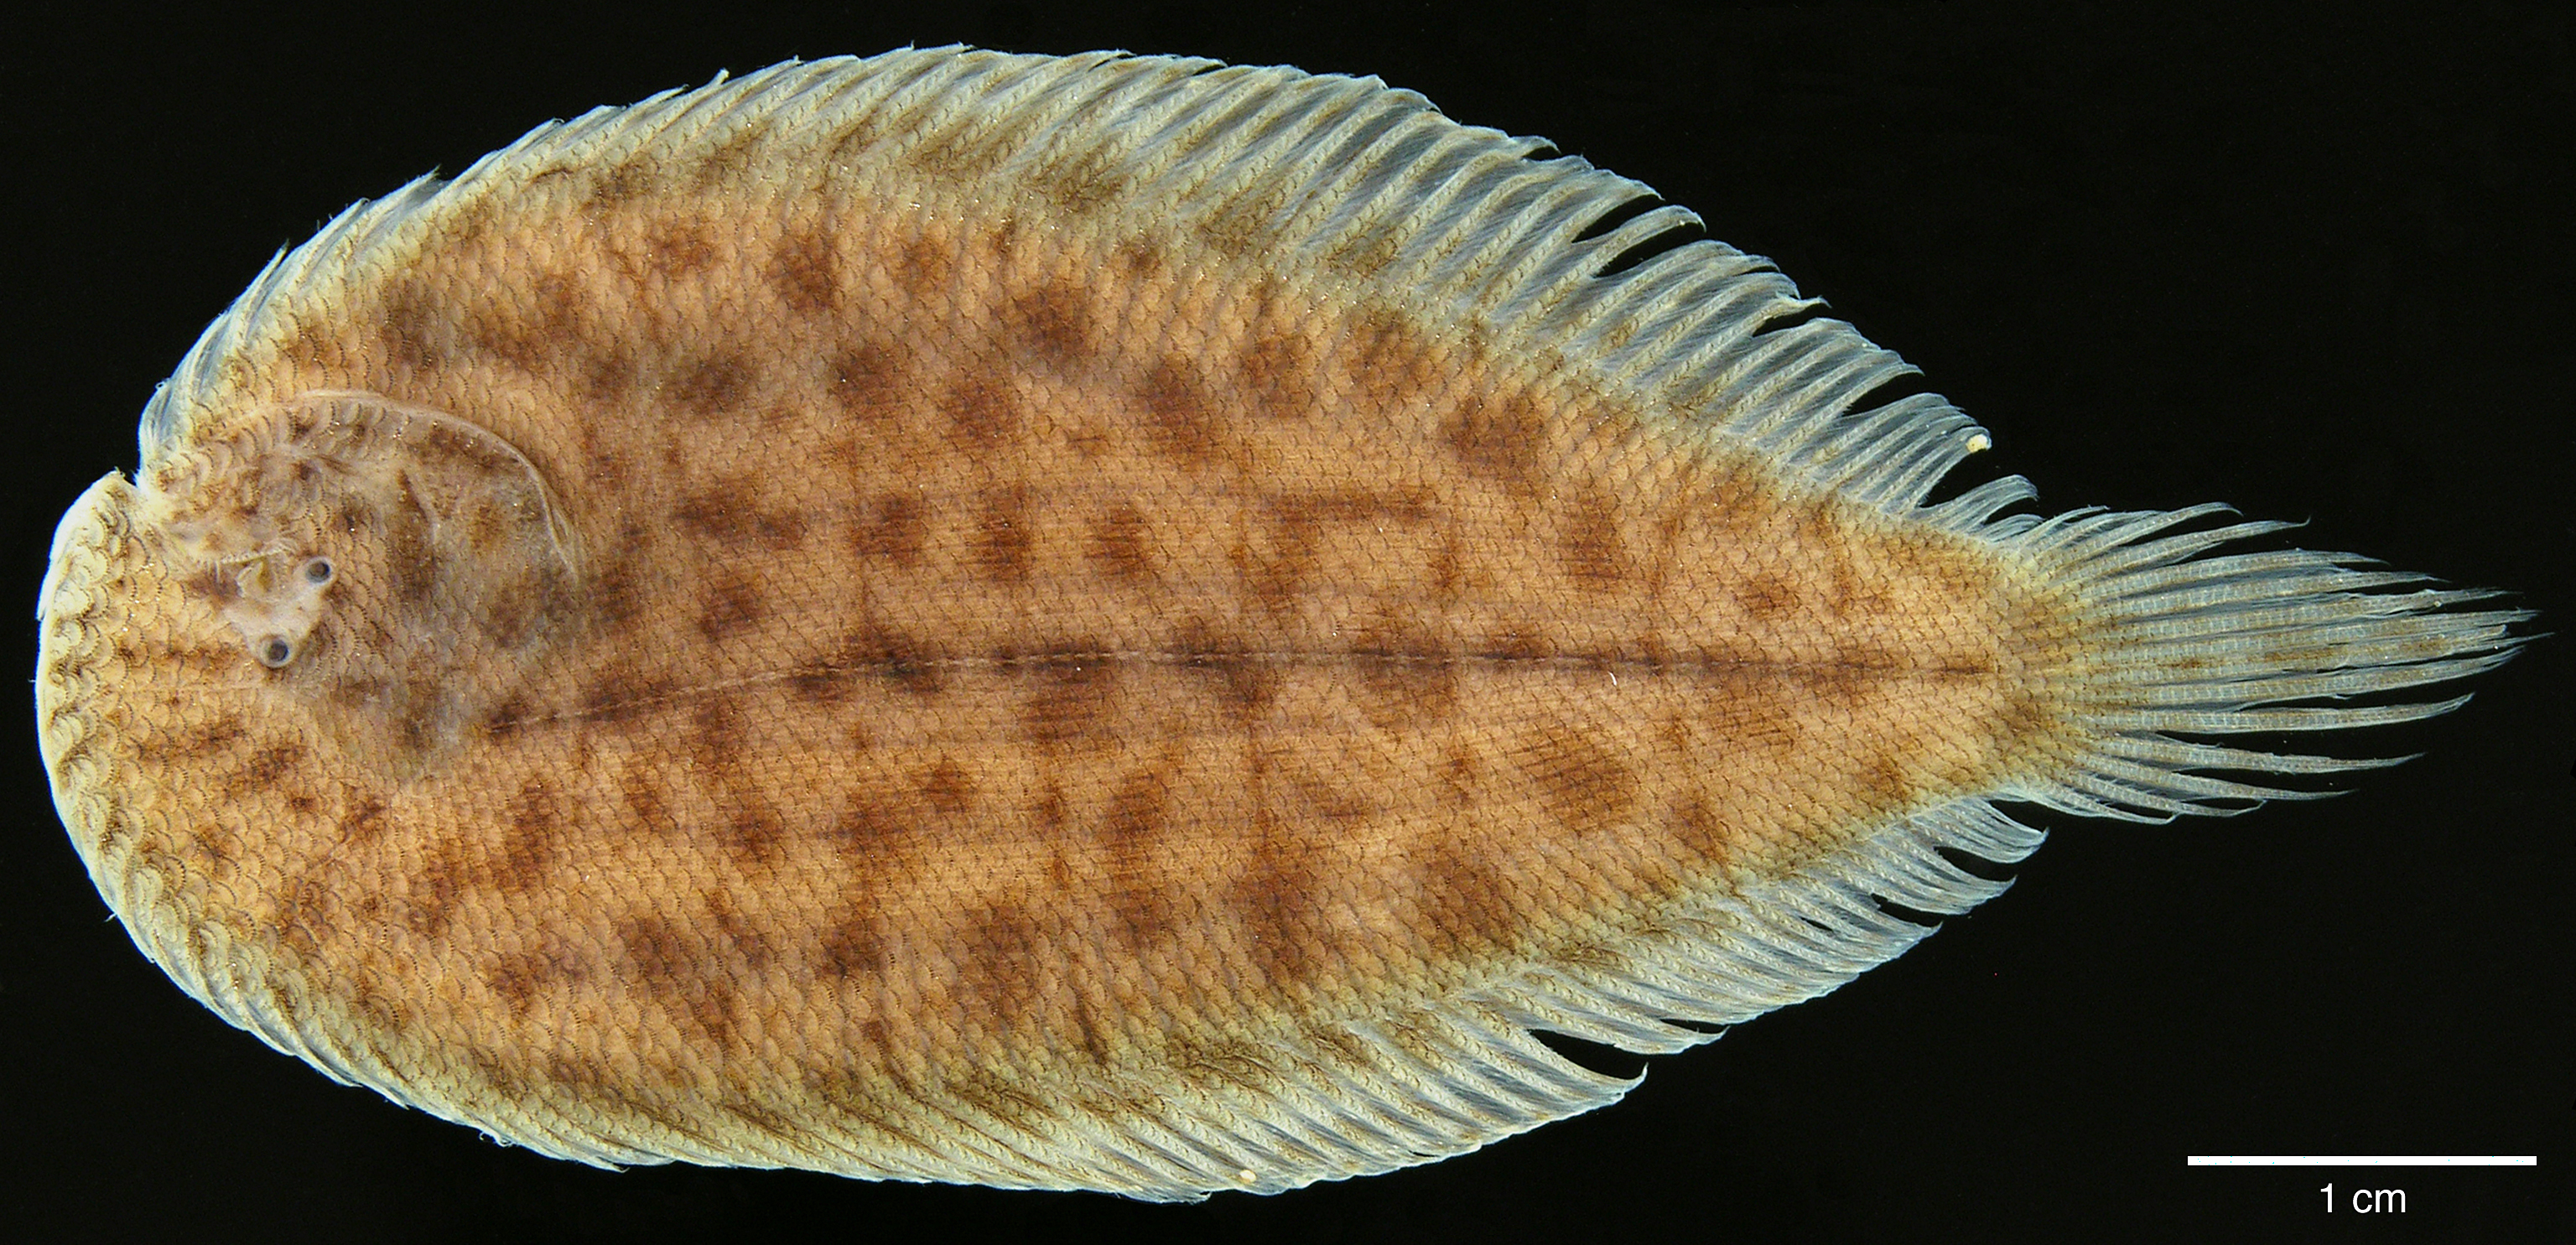 Paratype of <em>Apionichthys sauli</em>, IAvH-P-10566_Dorsal, 57.9 mm SL, eyed side (above) and blind side (below) (scale bar = 1 cm). Photograph by M. H. Sabaj Pérez